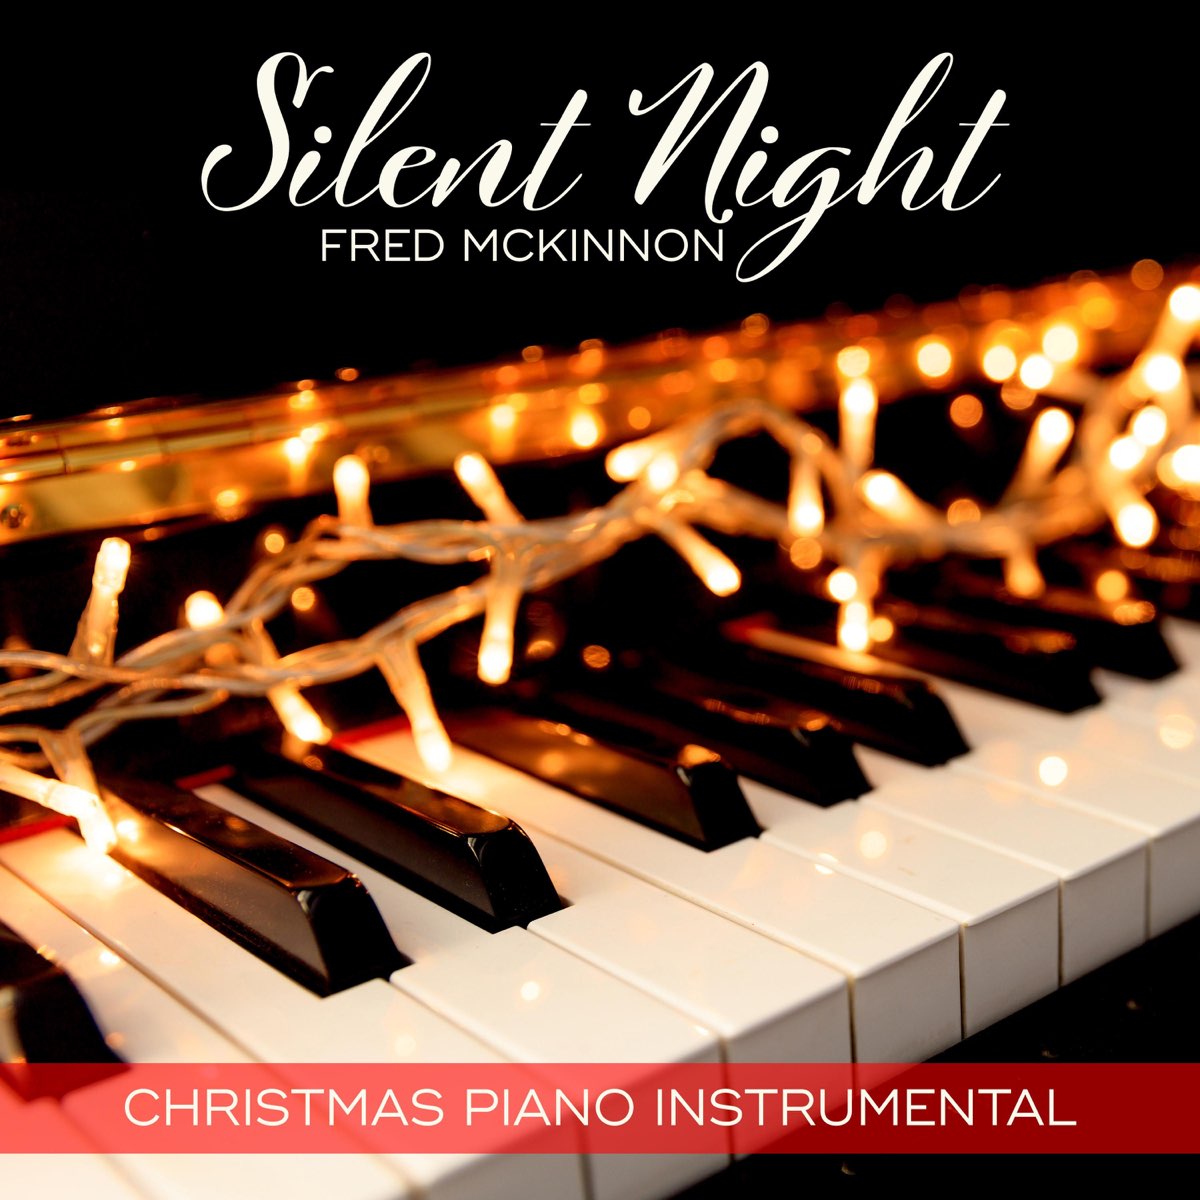 Silent Night (Christmas Piano Instrumental) de Fred McKinnon en Apple Music